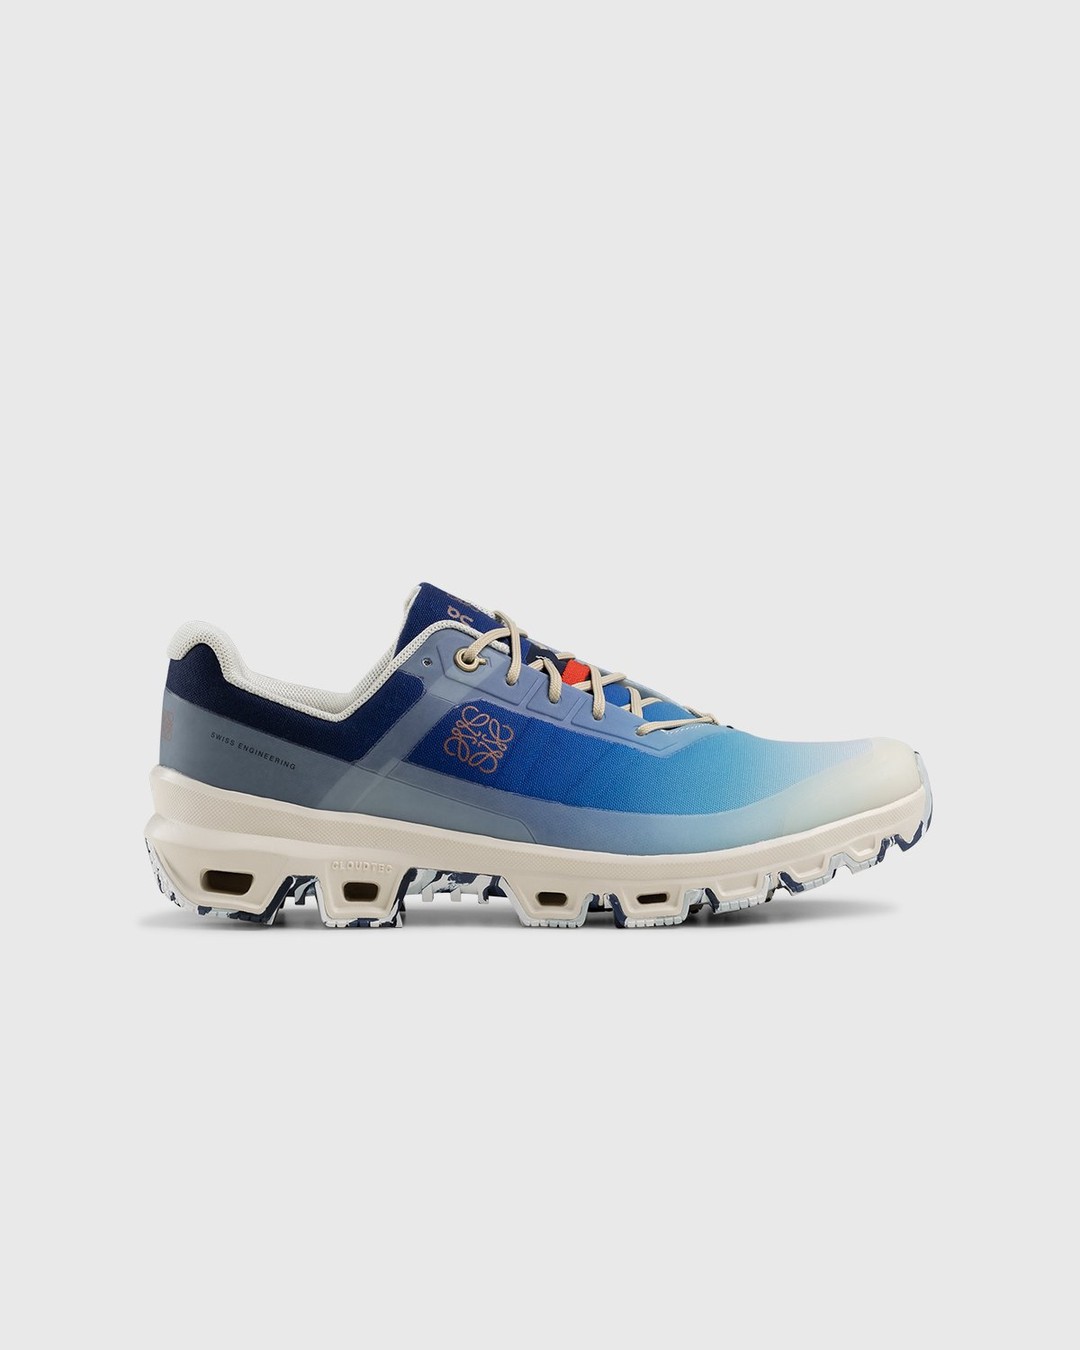 Loewe x On – Women's Cloudventure Gradient Blue - Low Top Sneakers - Blue - Image 1